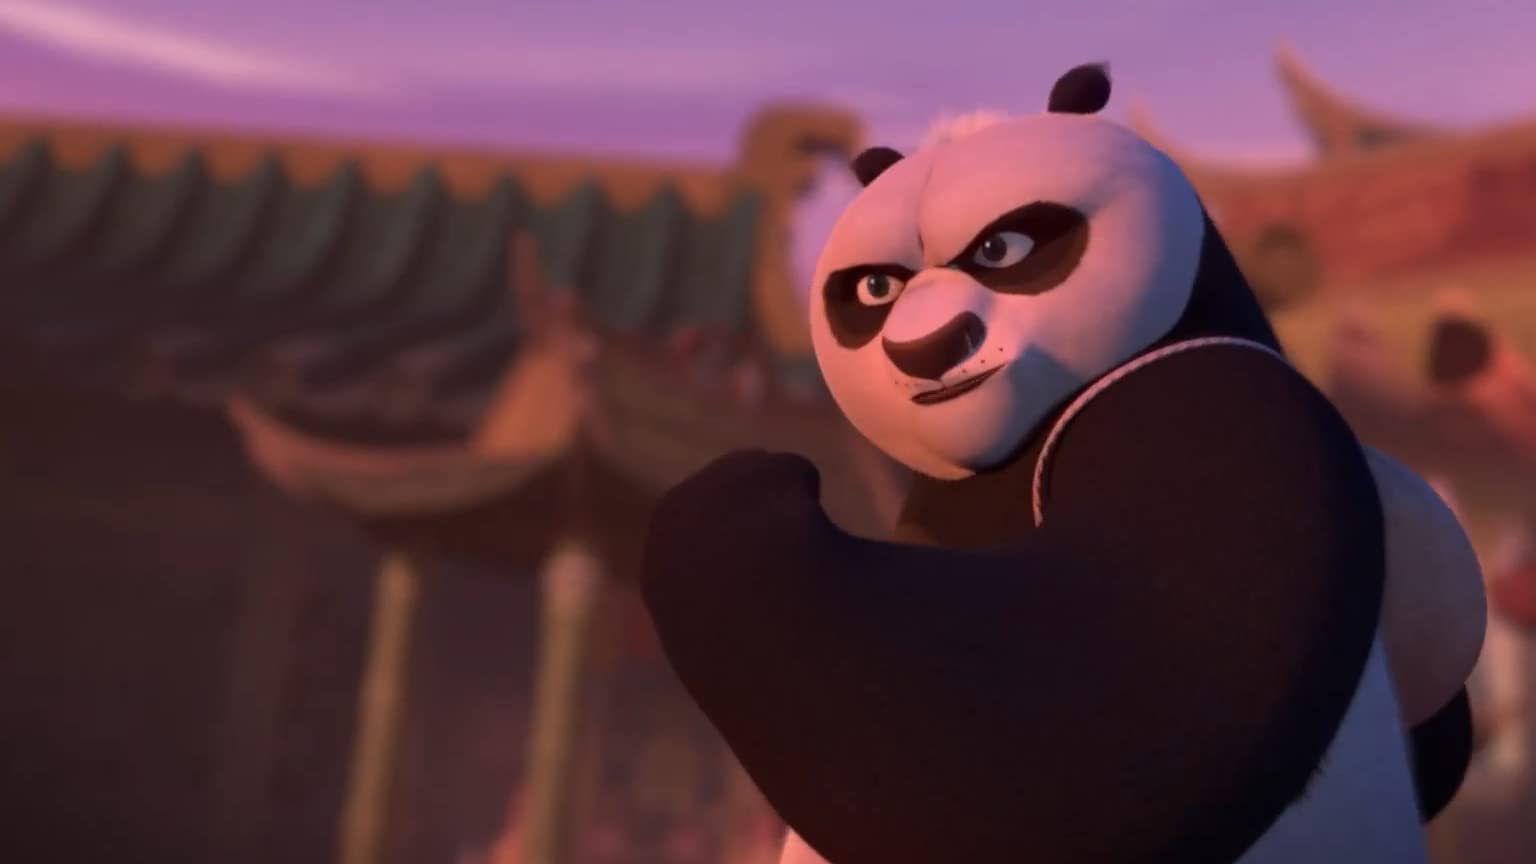 Kung Fu Panda: Il cavaliere dragone